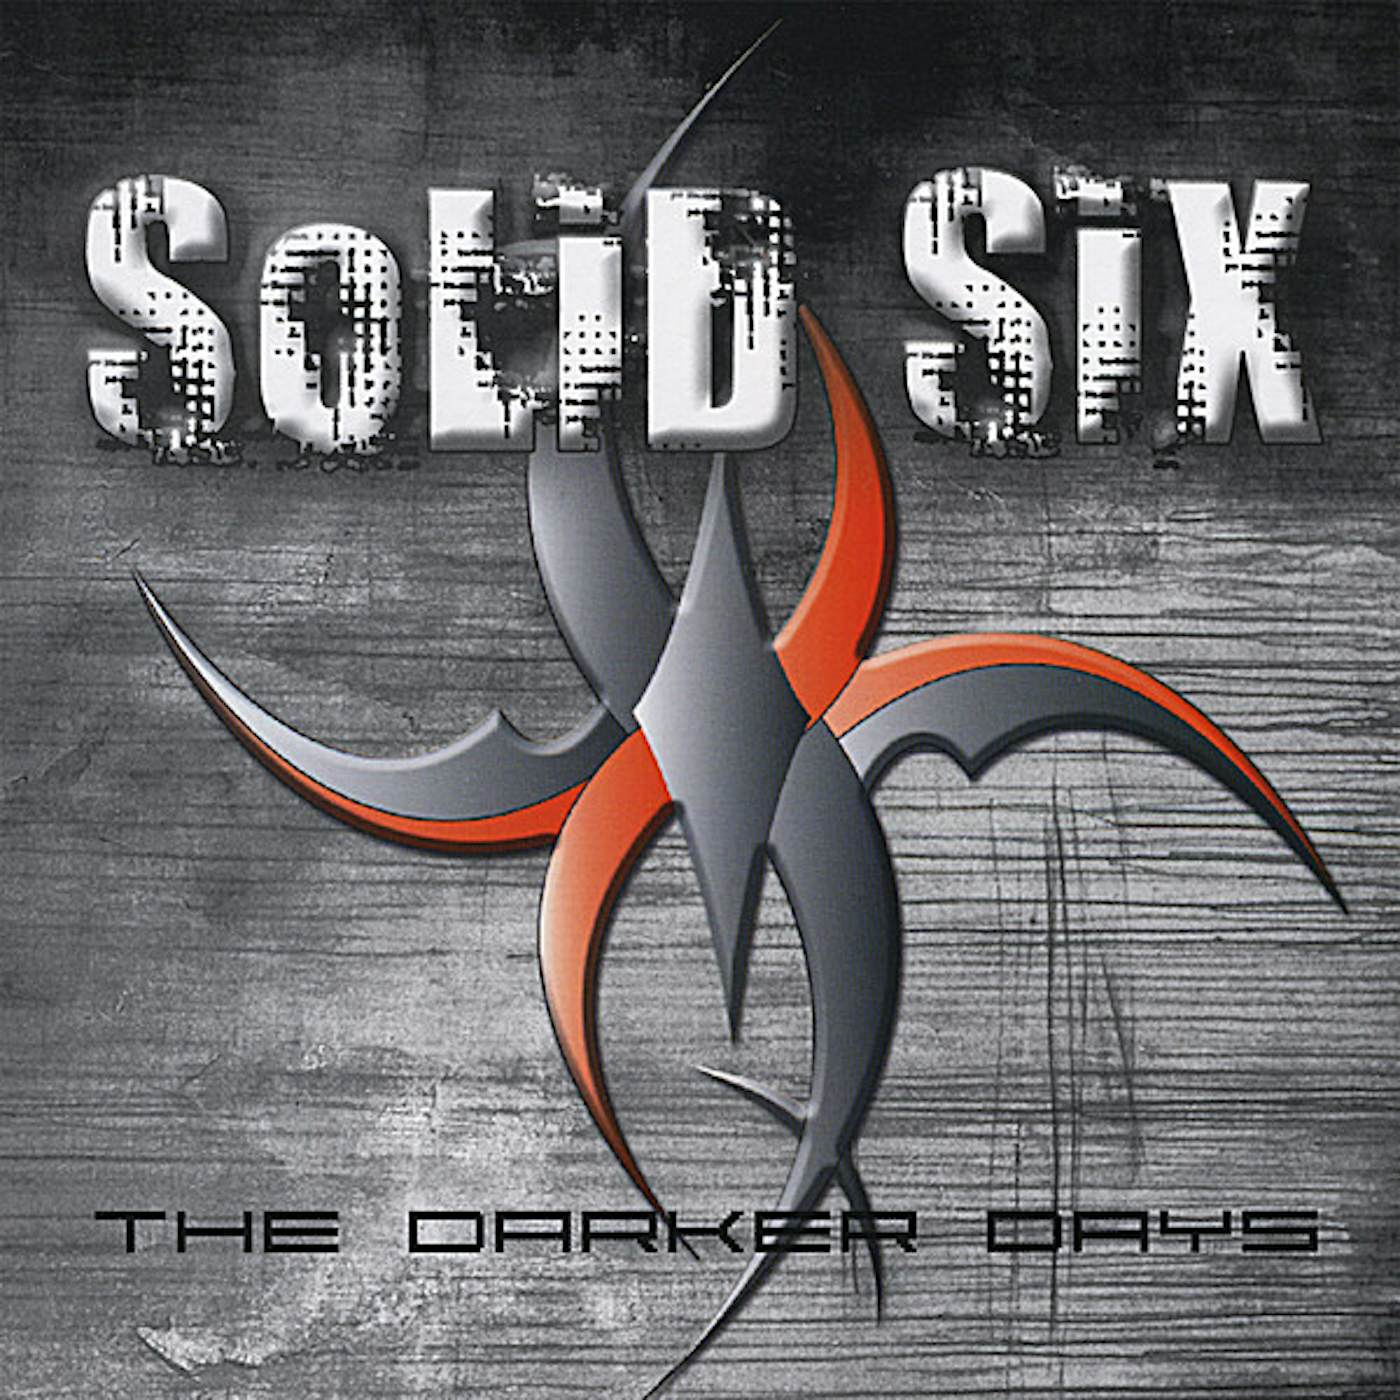 Solid Six DARKER DAYS CD